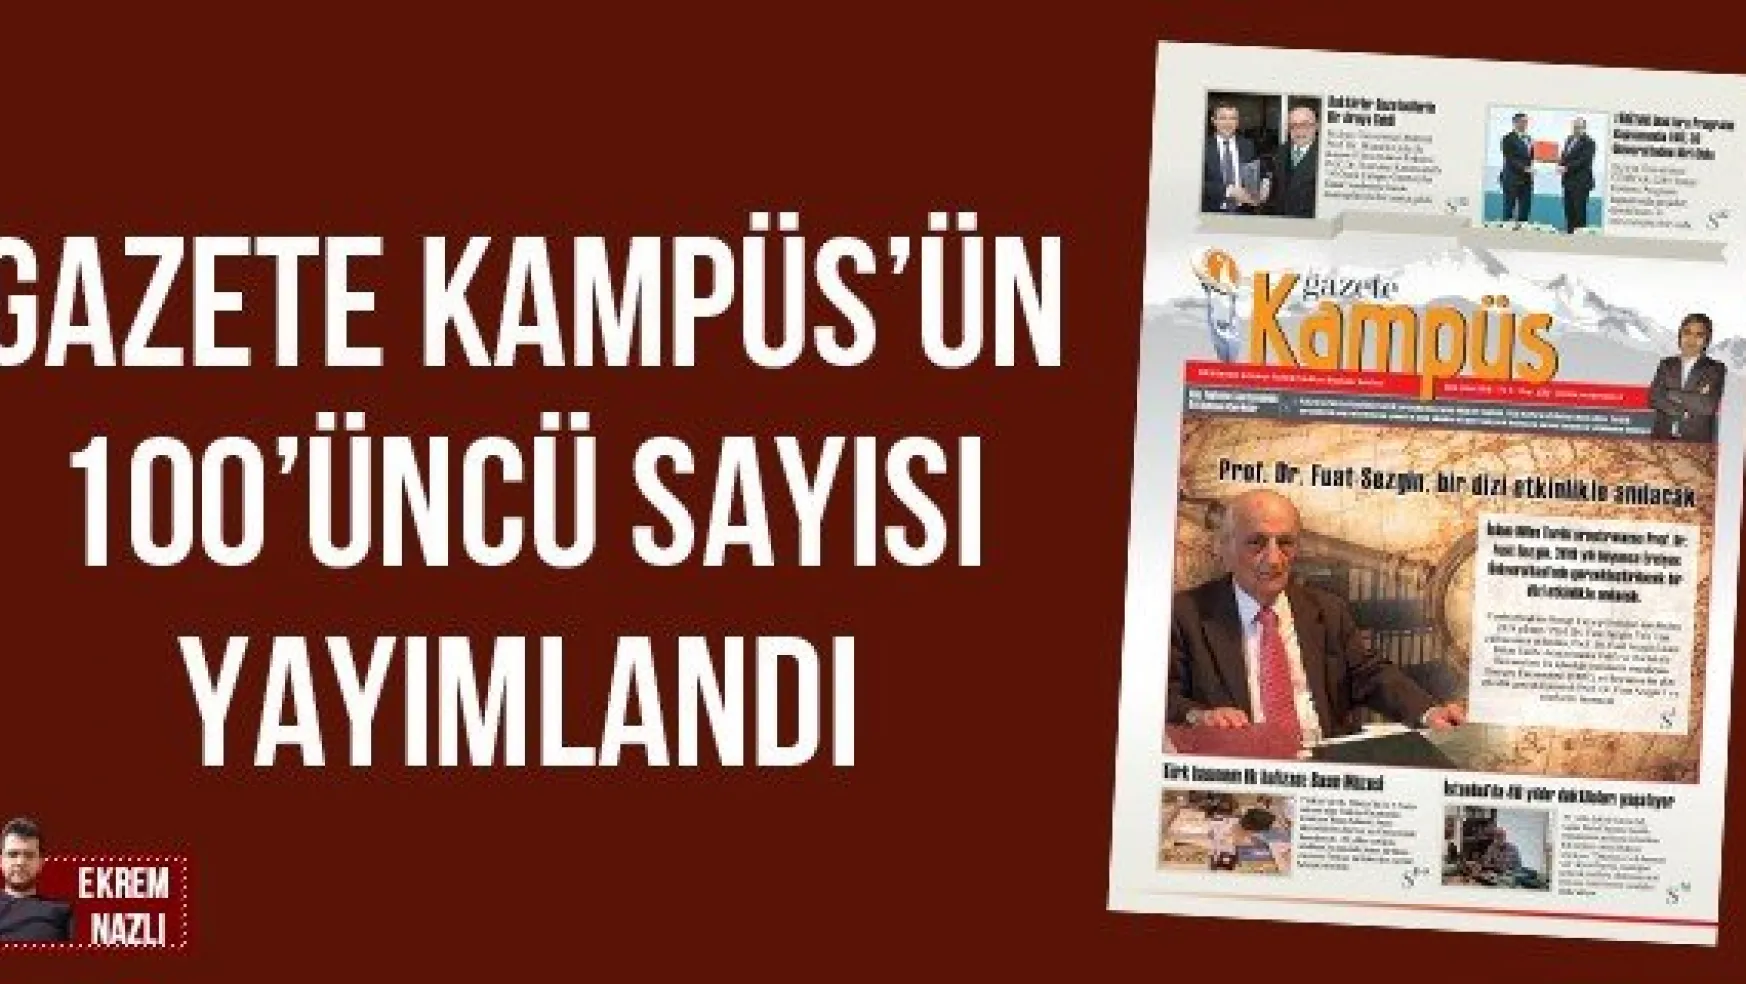 Gazete Kampüs'ün 100'üncü Sayısı Yayımlandı